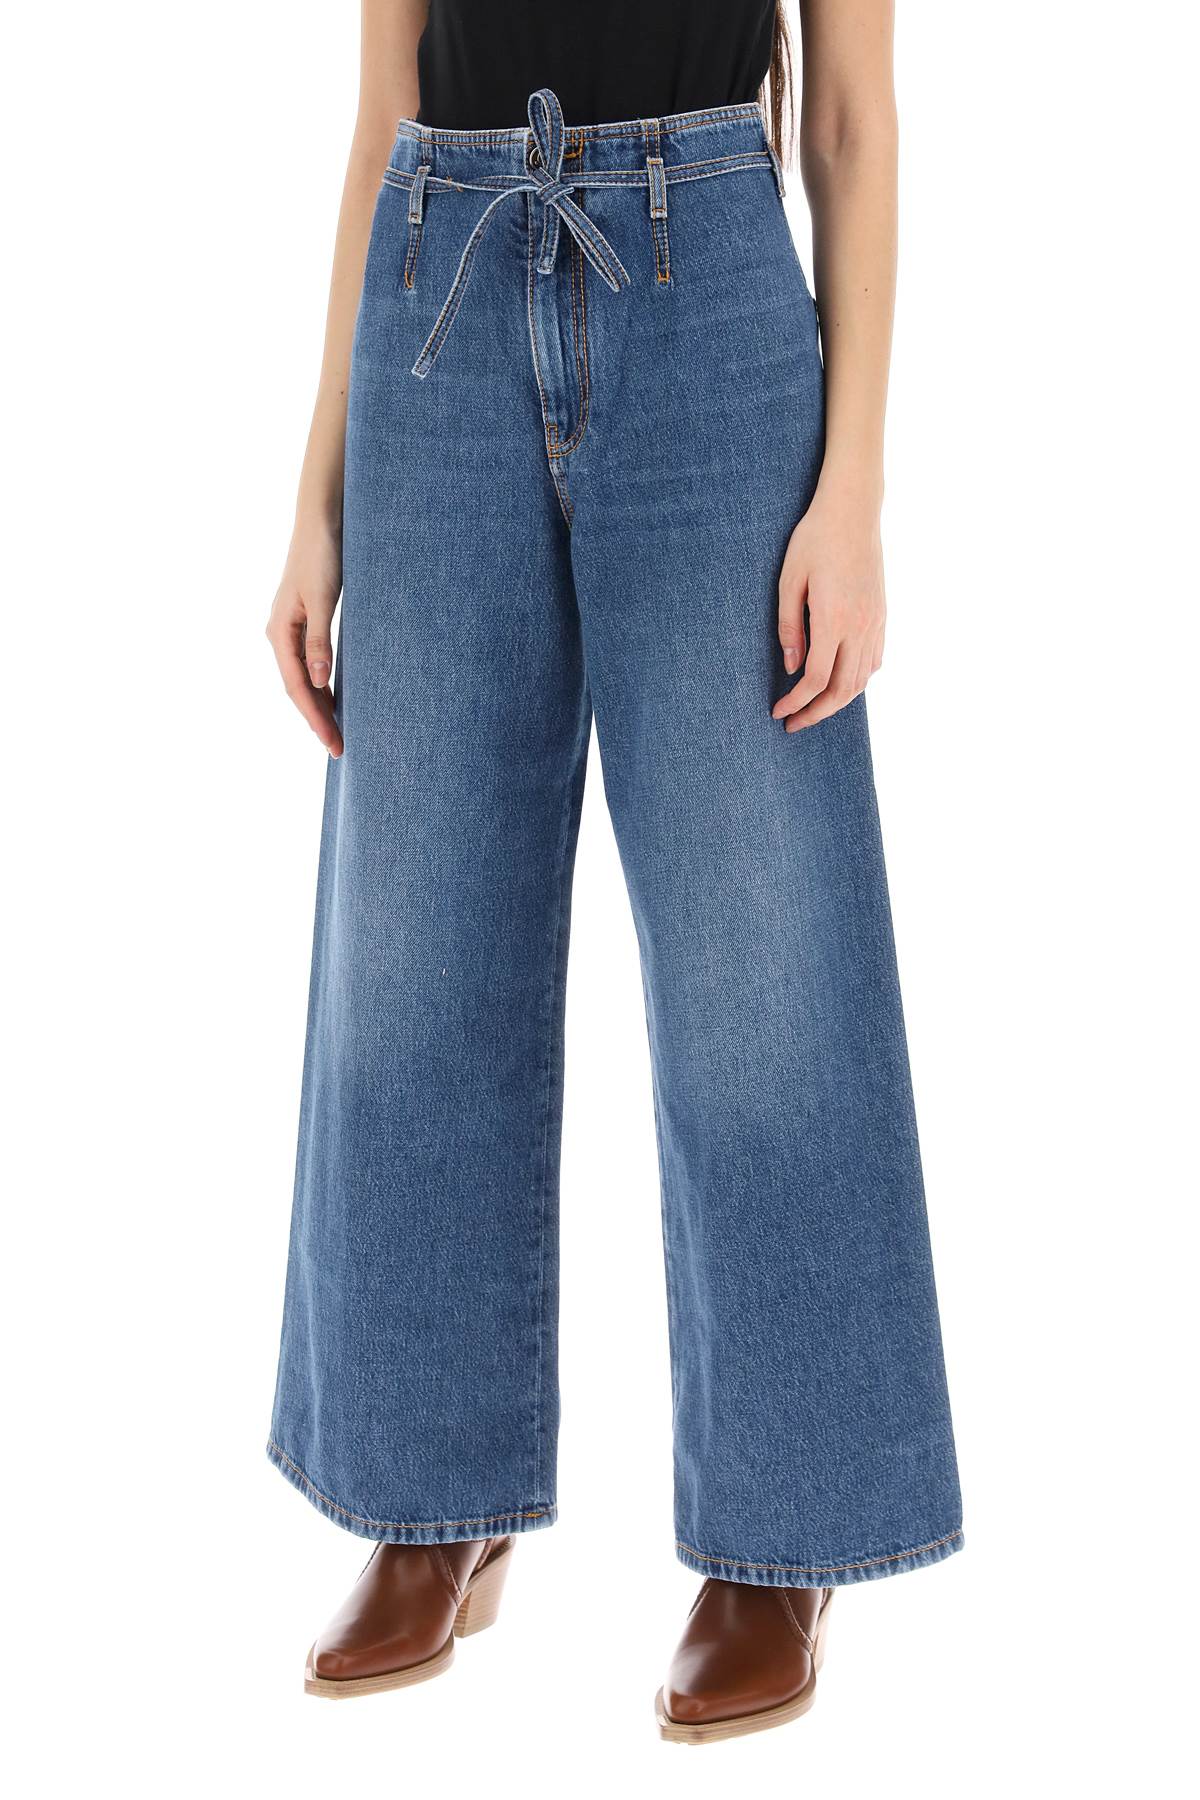 Etro wide leg jeans